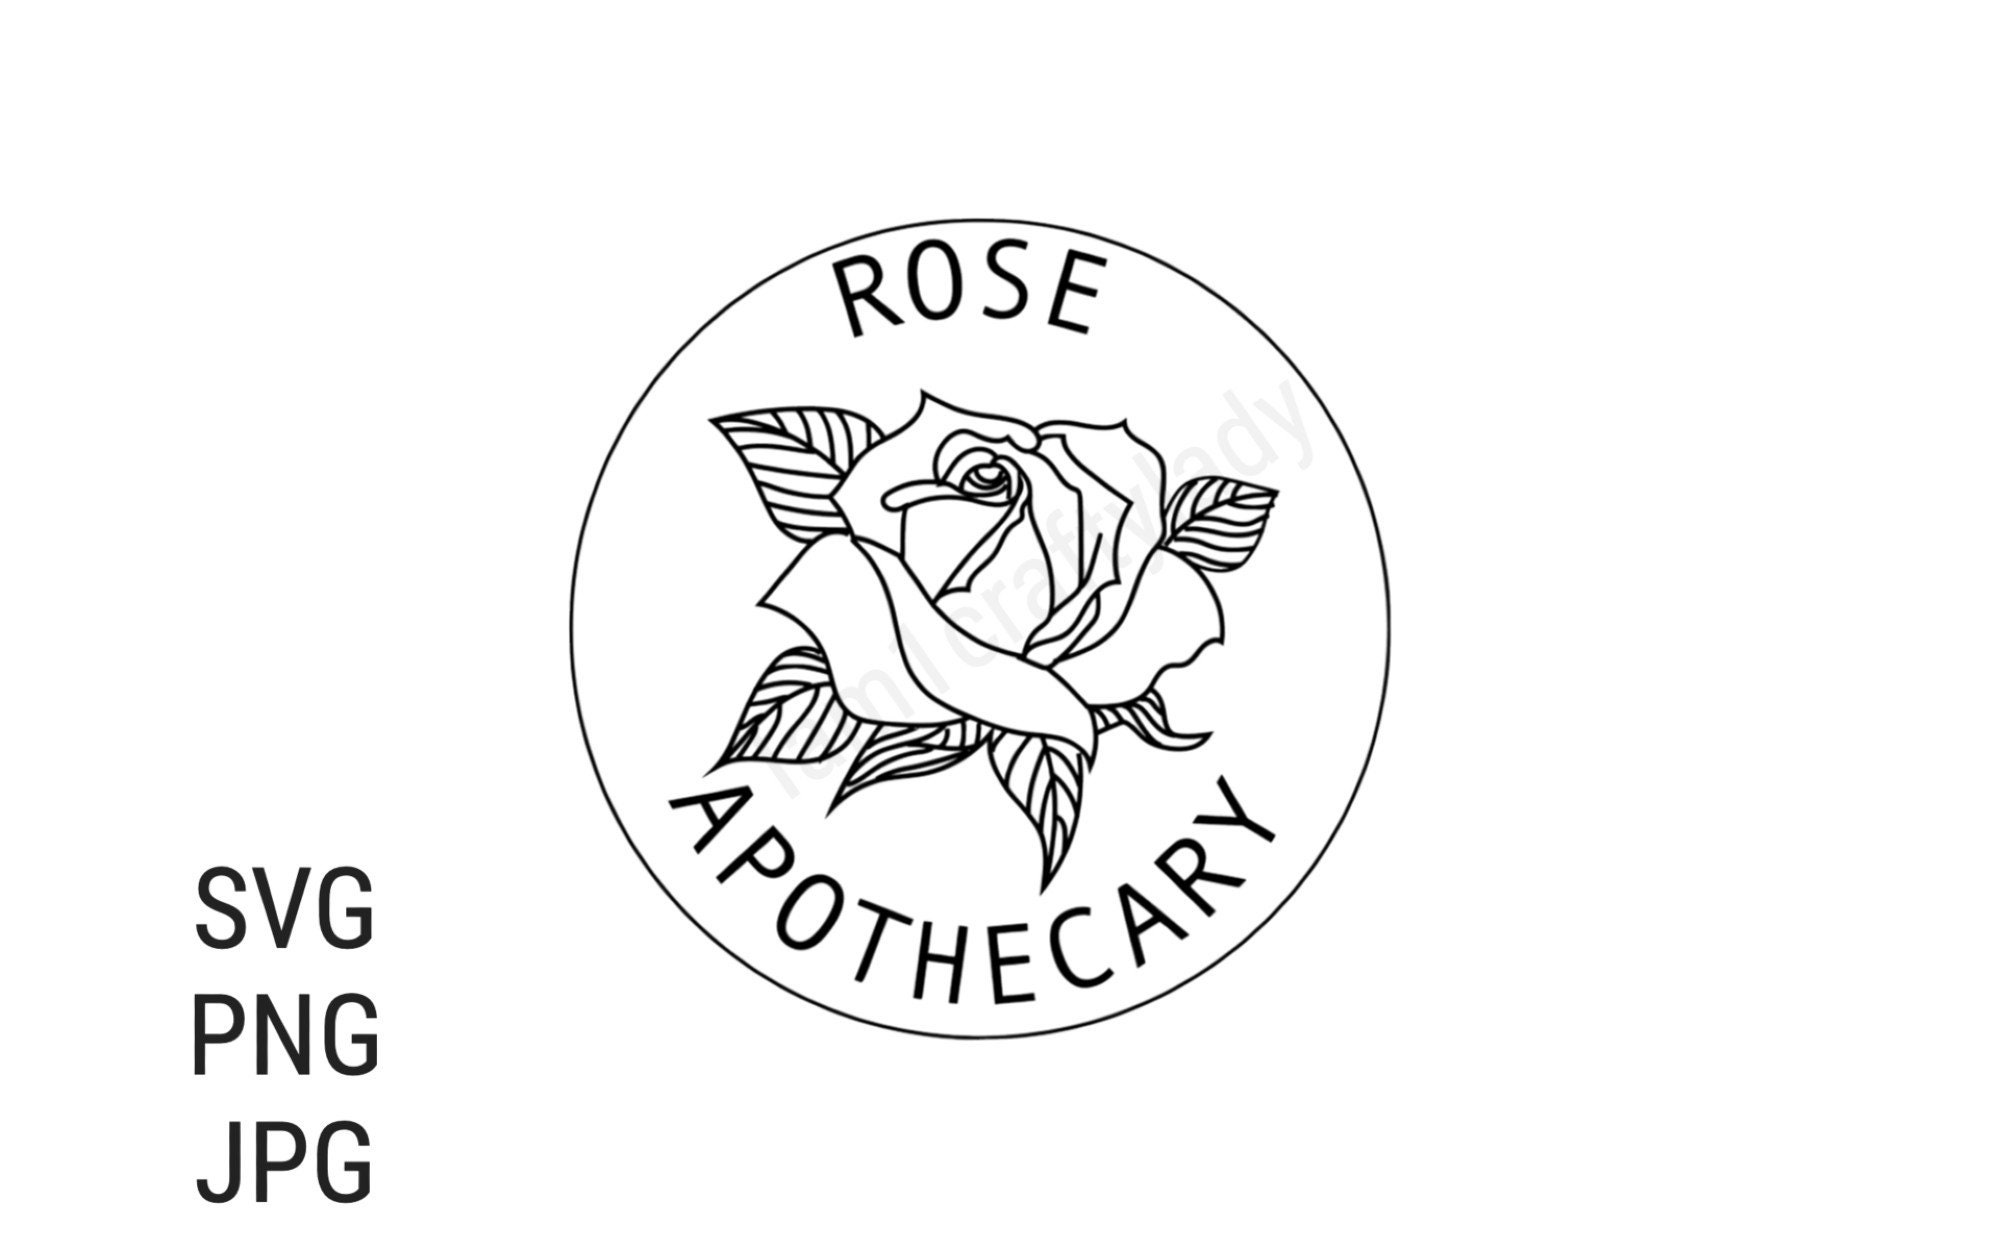 Rose Apothecary svg png jpg logo instantané téléchargement | Etsy